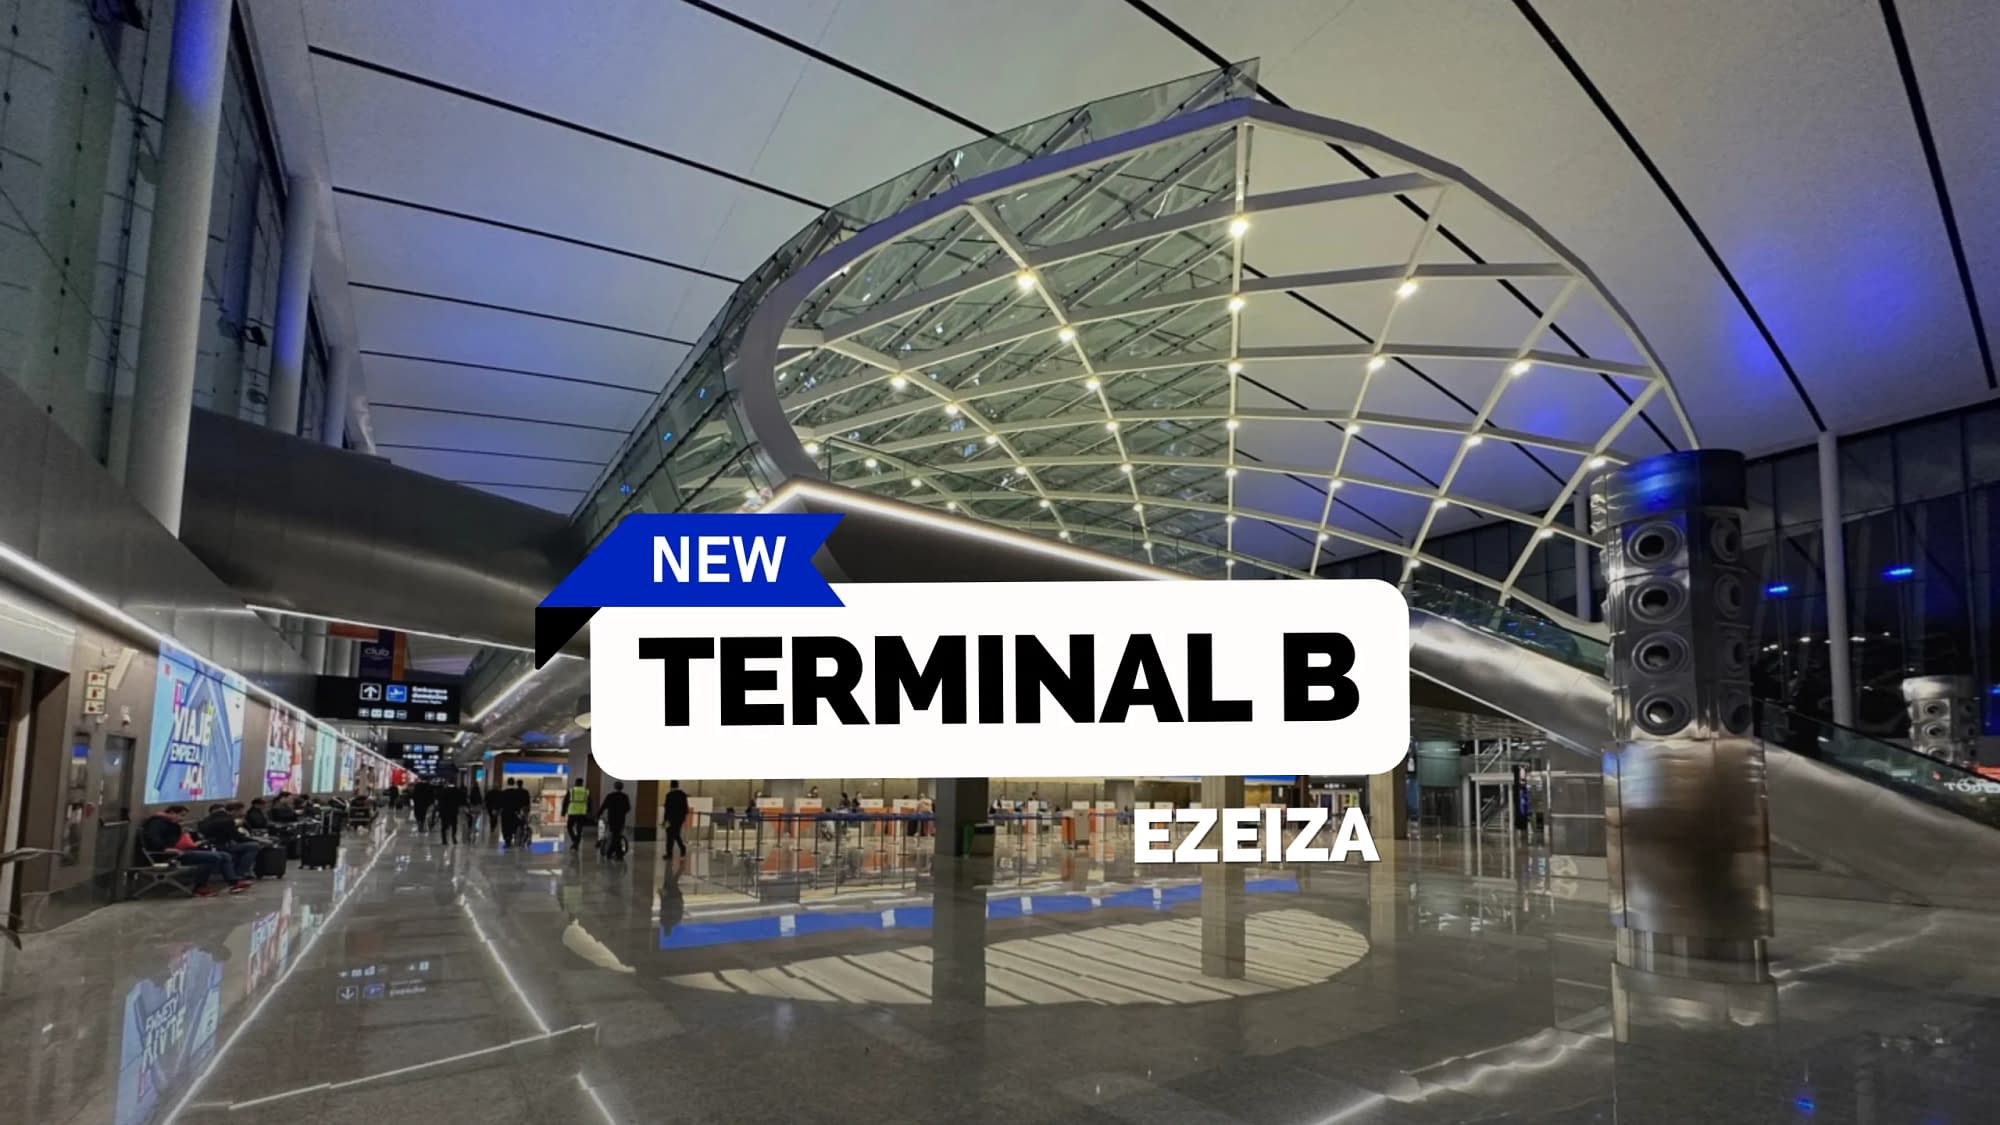 The new Terminal B at Ezeiza International Airport (2023)